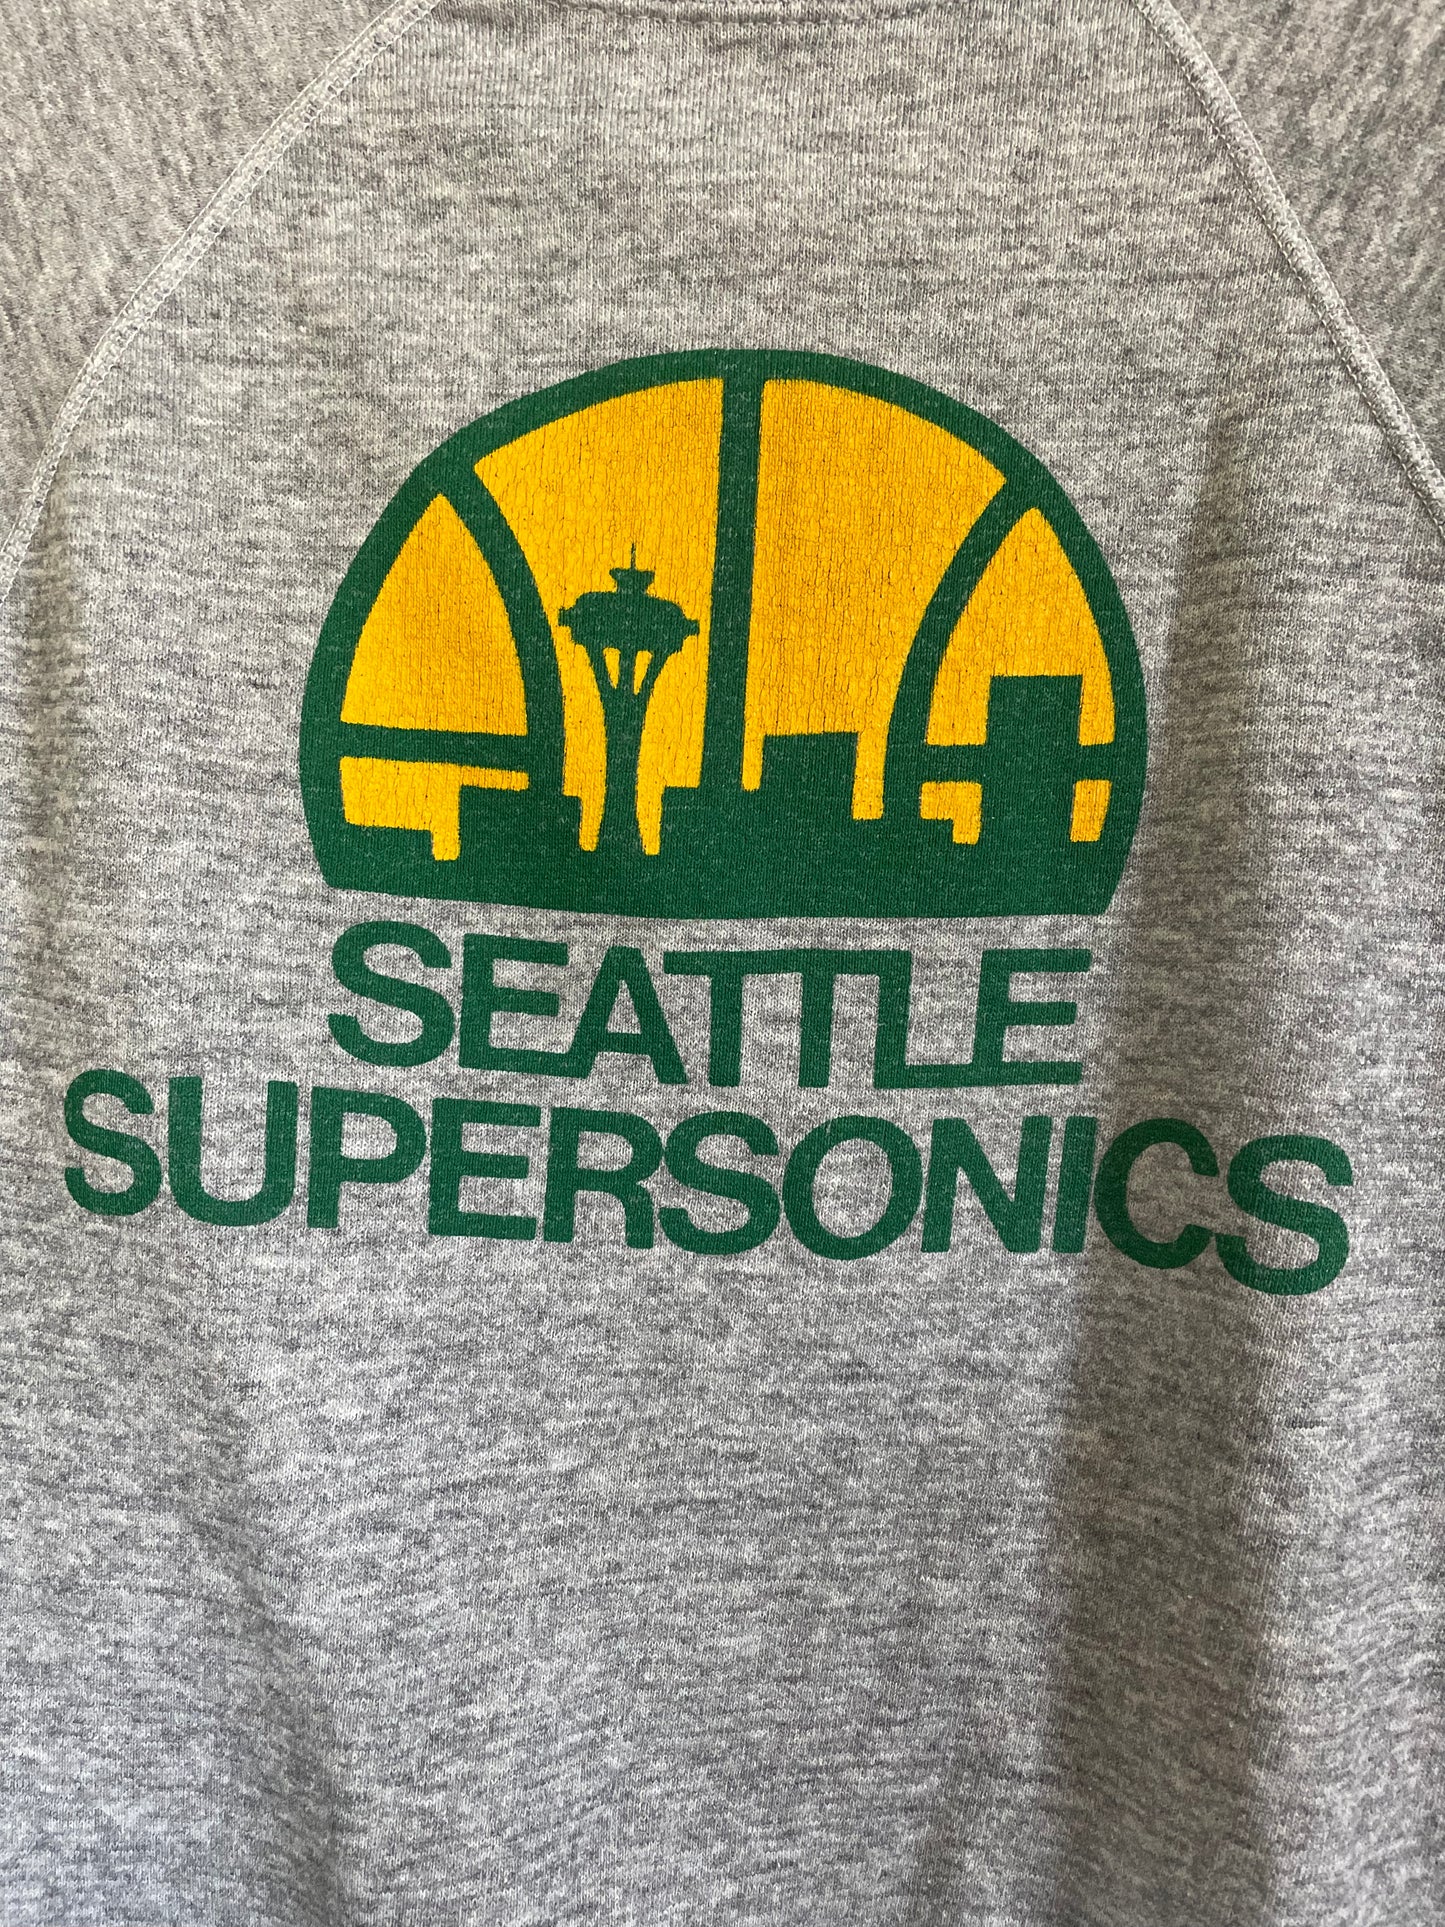 80s Seattle SuperSonics Sweatshirt